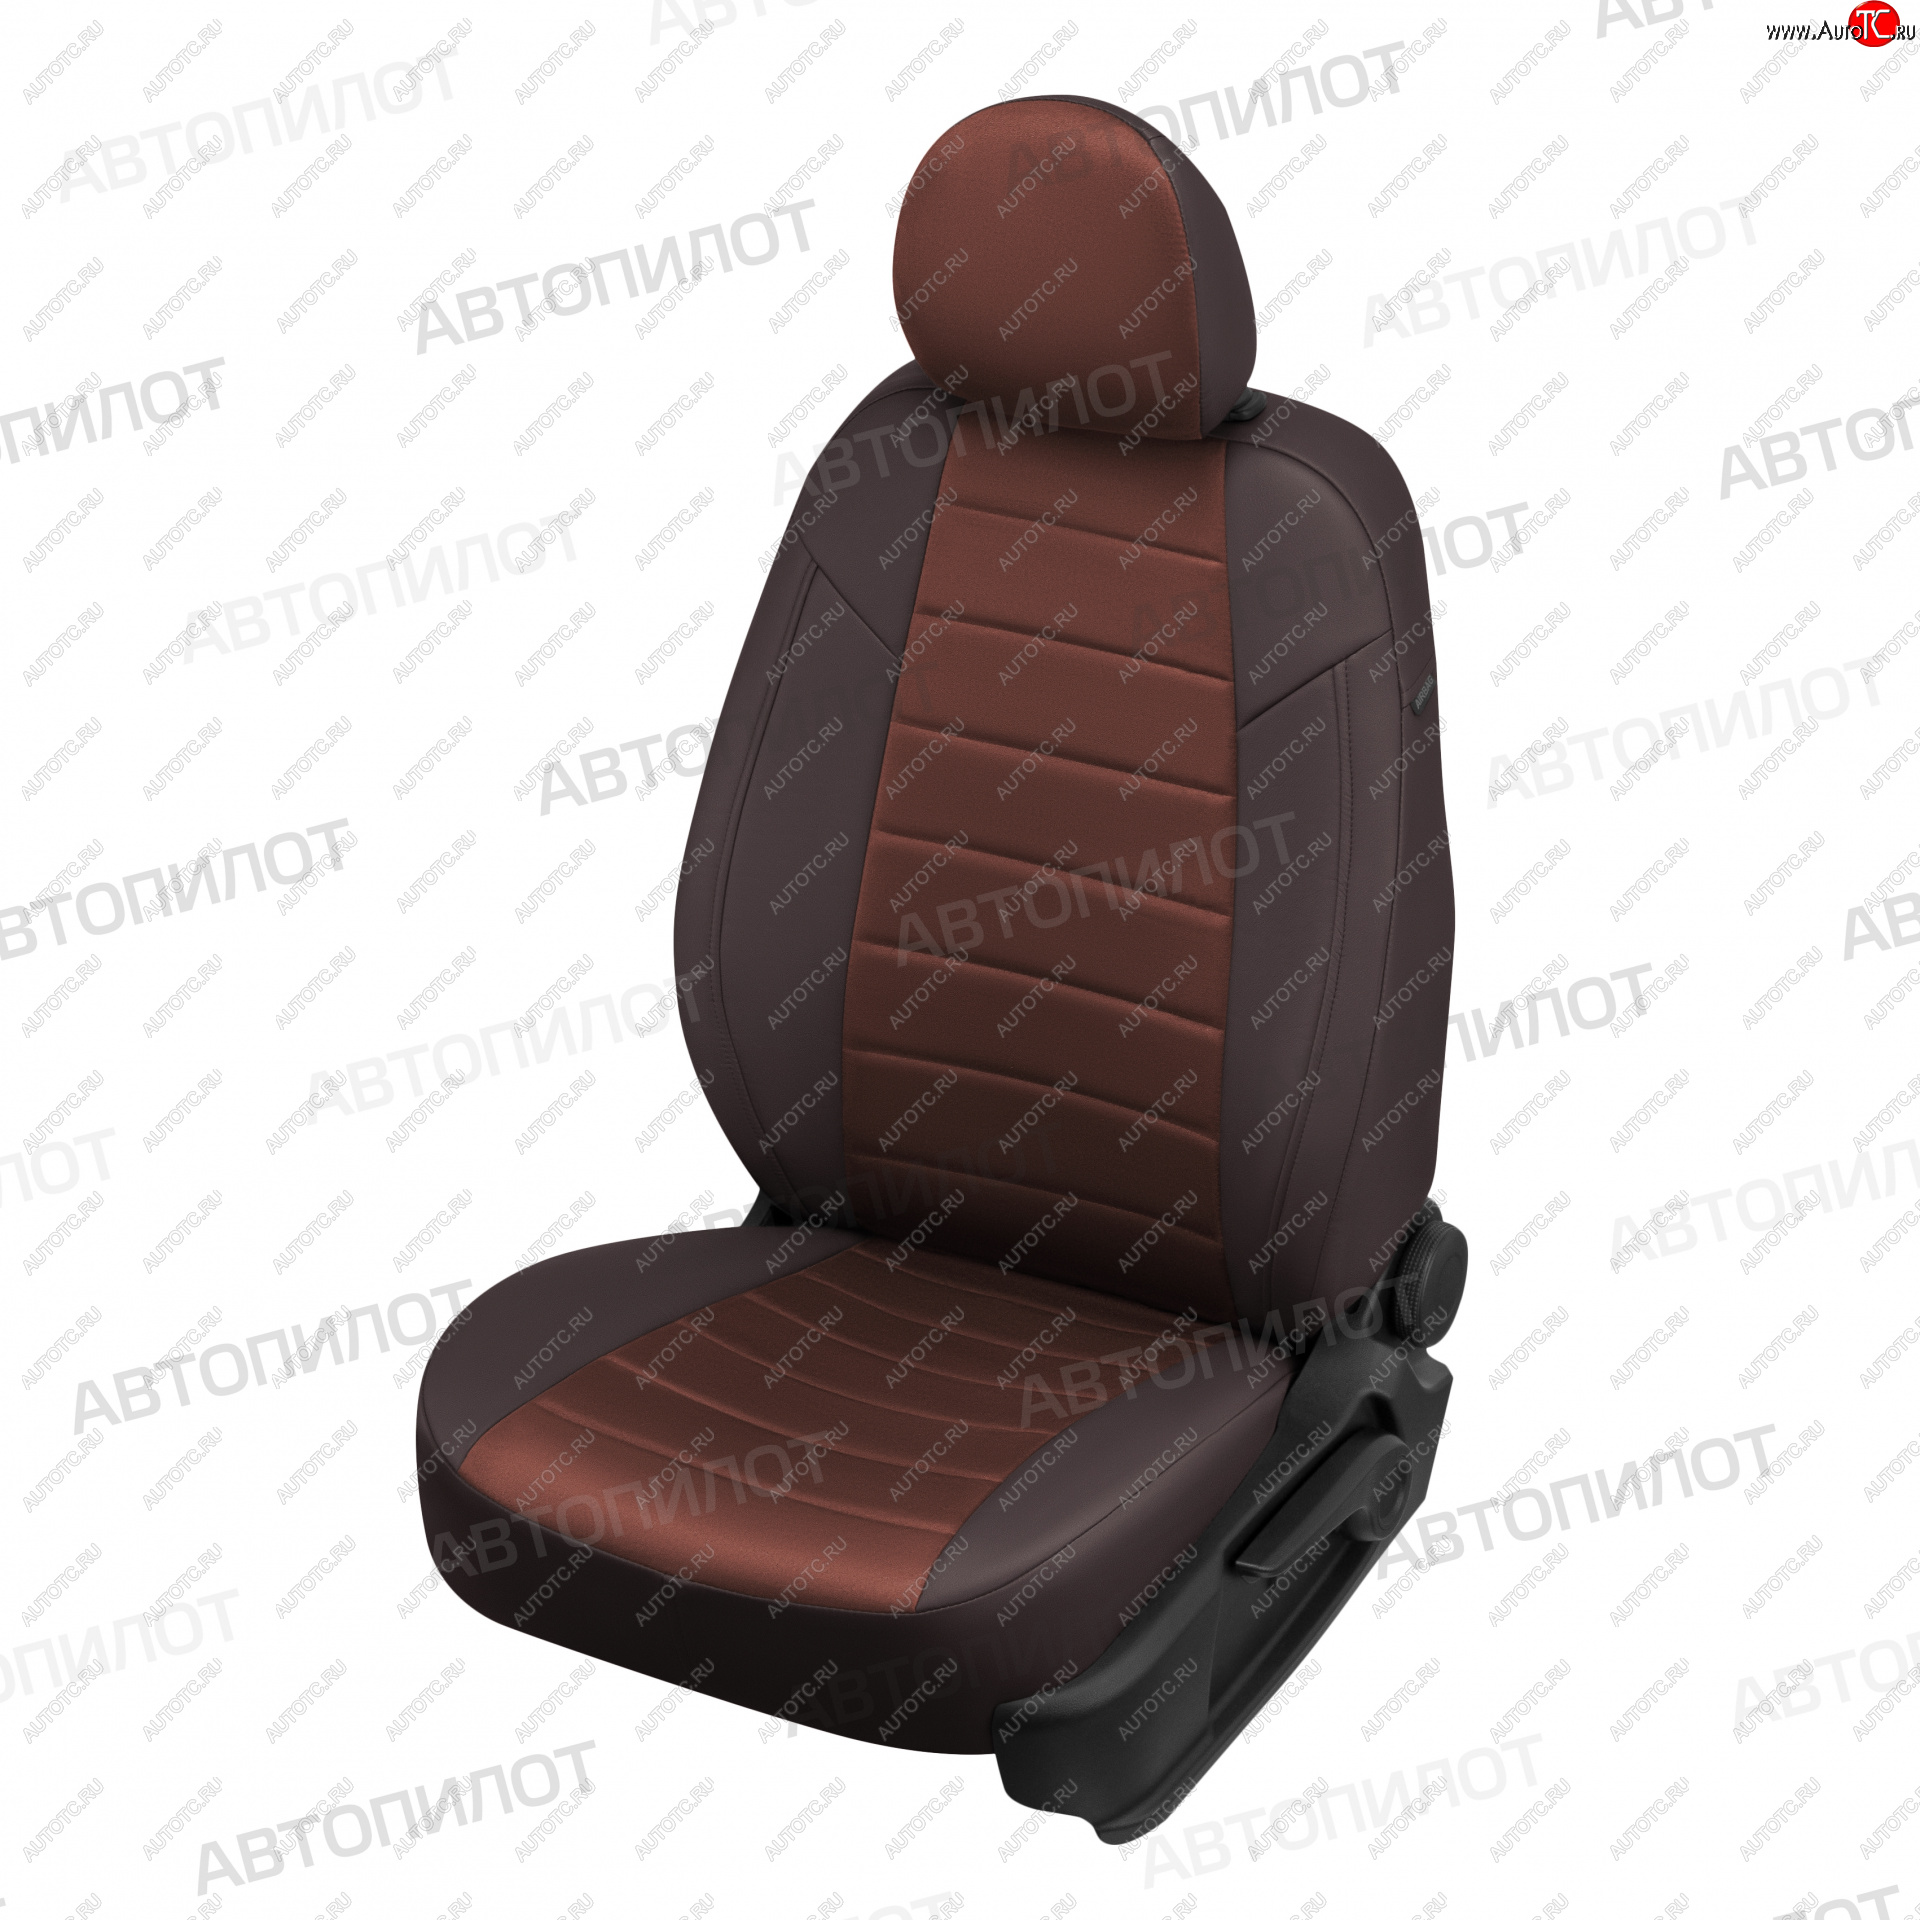 13 449 р. Чехлы сидений (экокожа/алькантара) Автопилот  Lexus IS ( 350 (XE20) седан,  250 XE20 седан) (2005-2013) (шоколад)